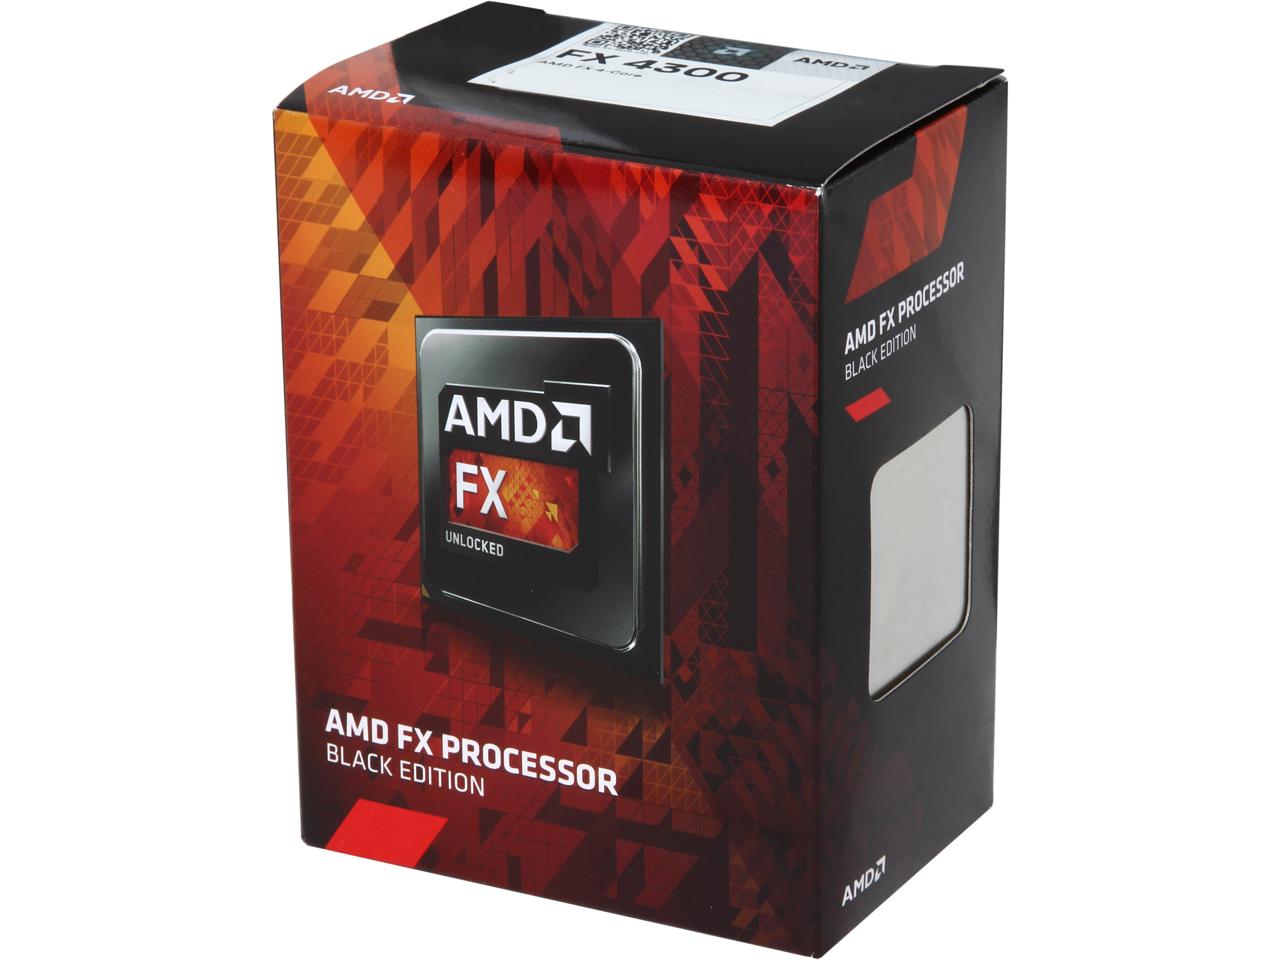 Amd Fd4300wmhkbox Quad-Core Fx-4300 3.8 Ghz 64-Bit Processor Black Edition - image 1 of 2